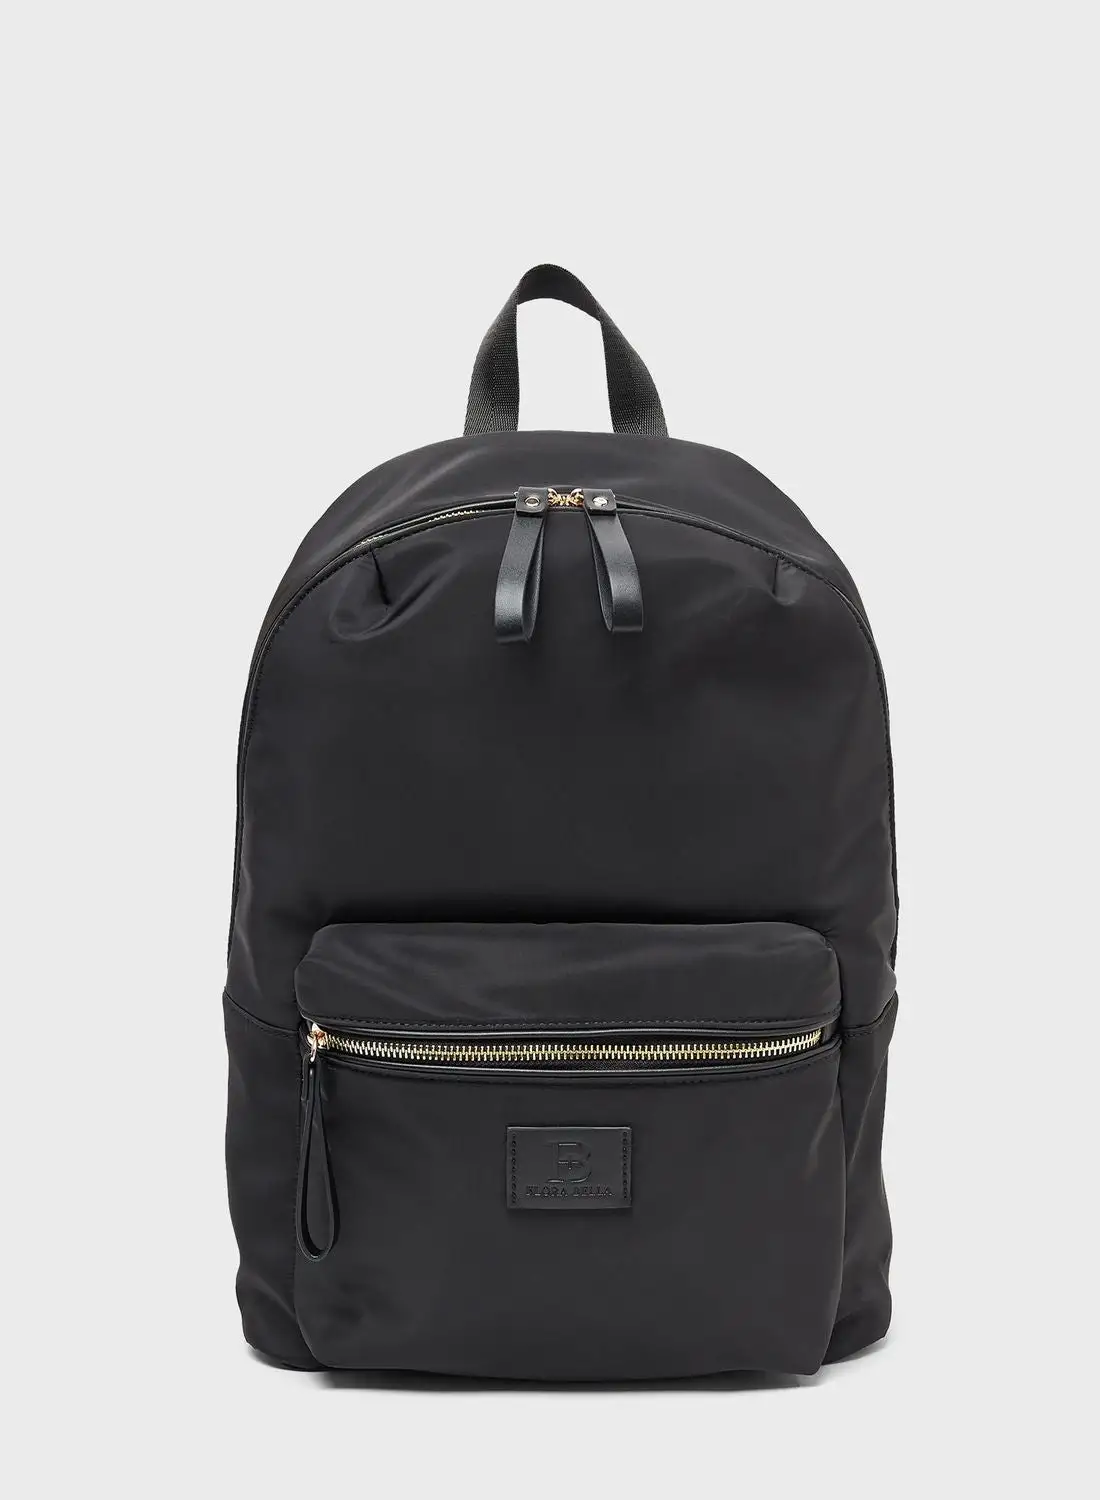 shoexpress Top Handle Backpack